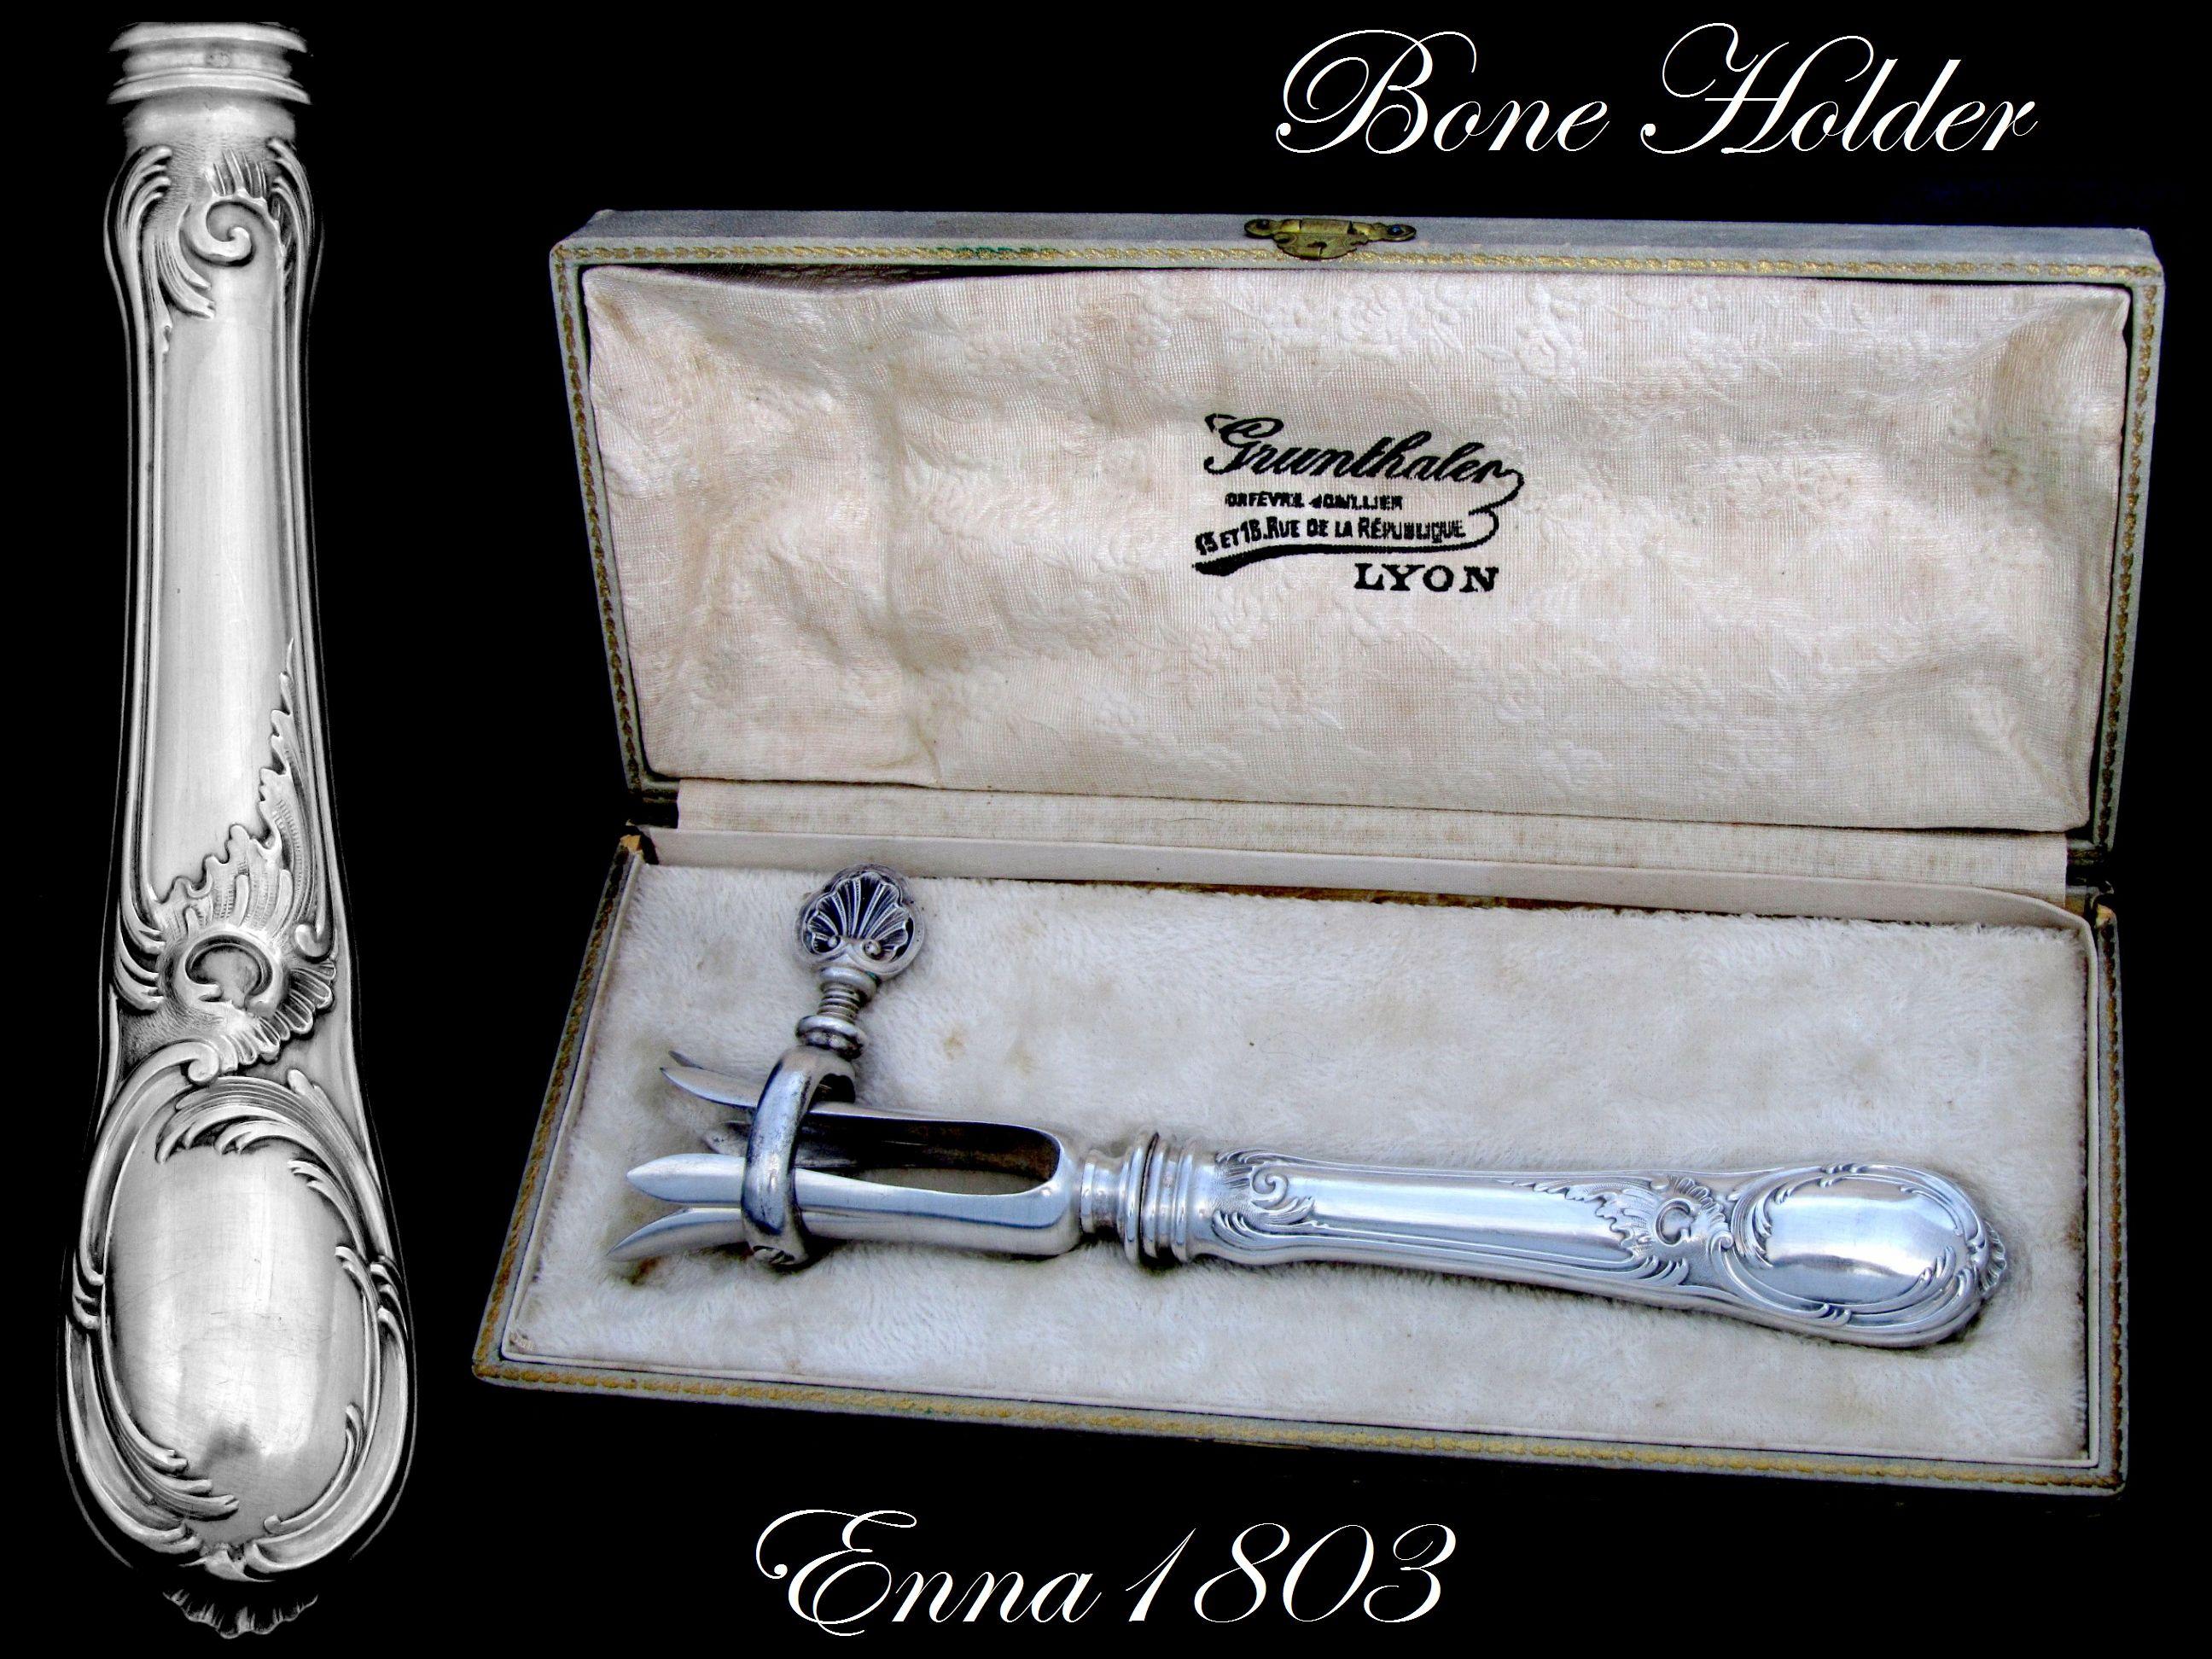 Late 19th Century Soufflot French Sterling Silver Bone Holder, Original Box